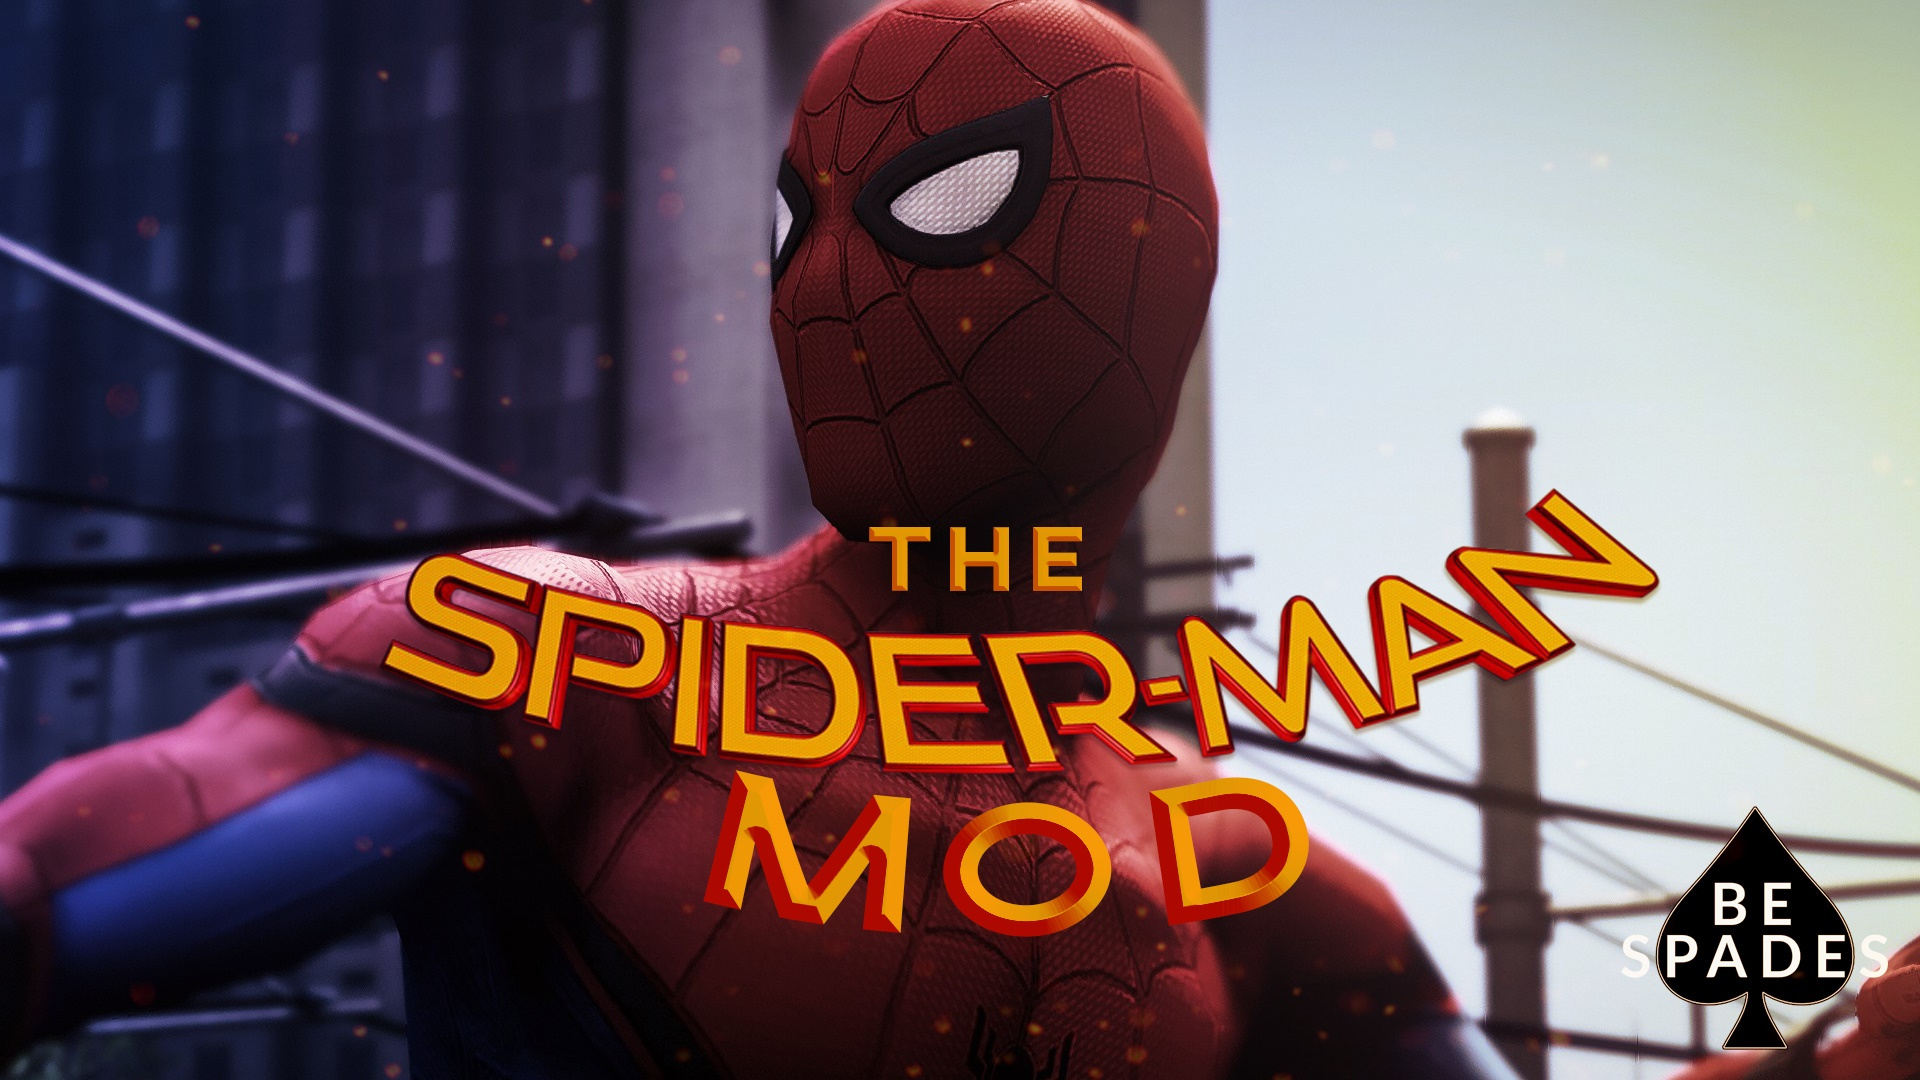 Gta spiderman mod game download free